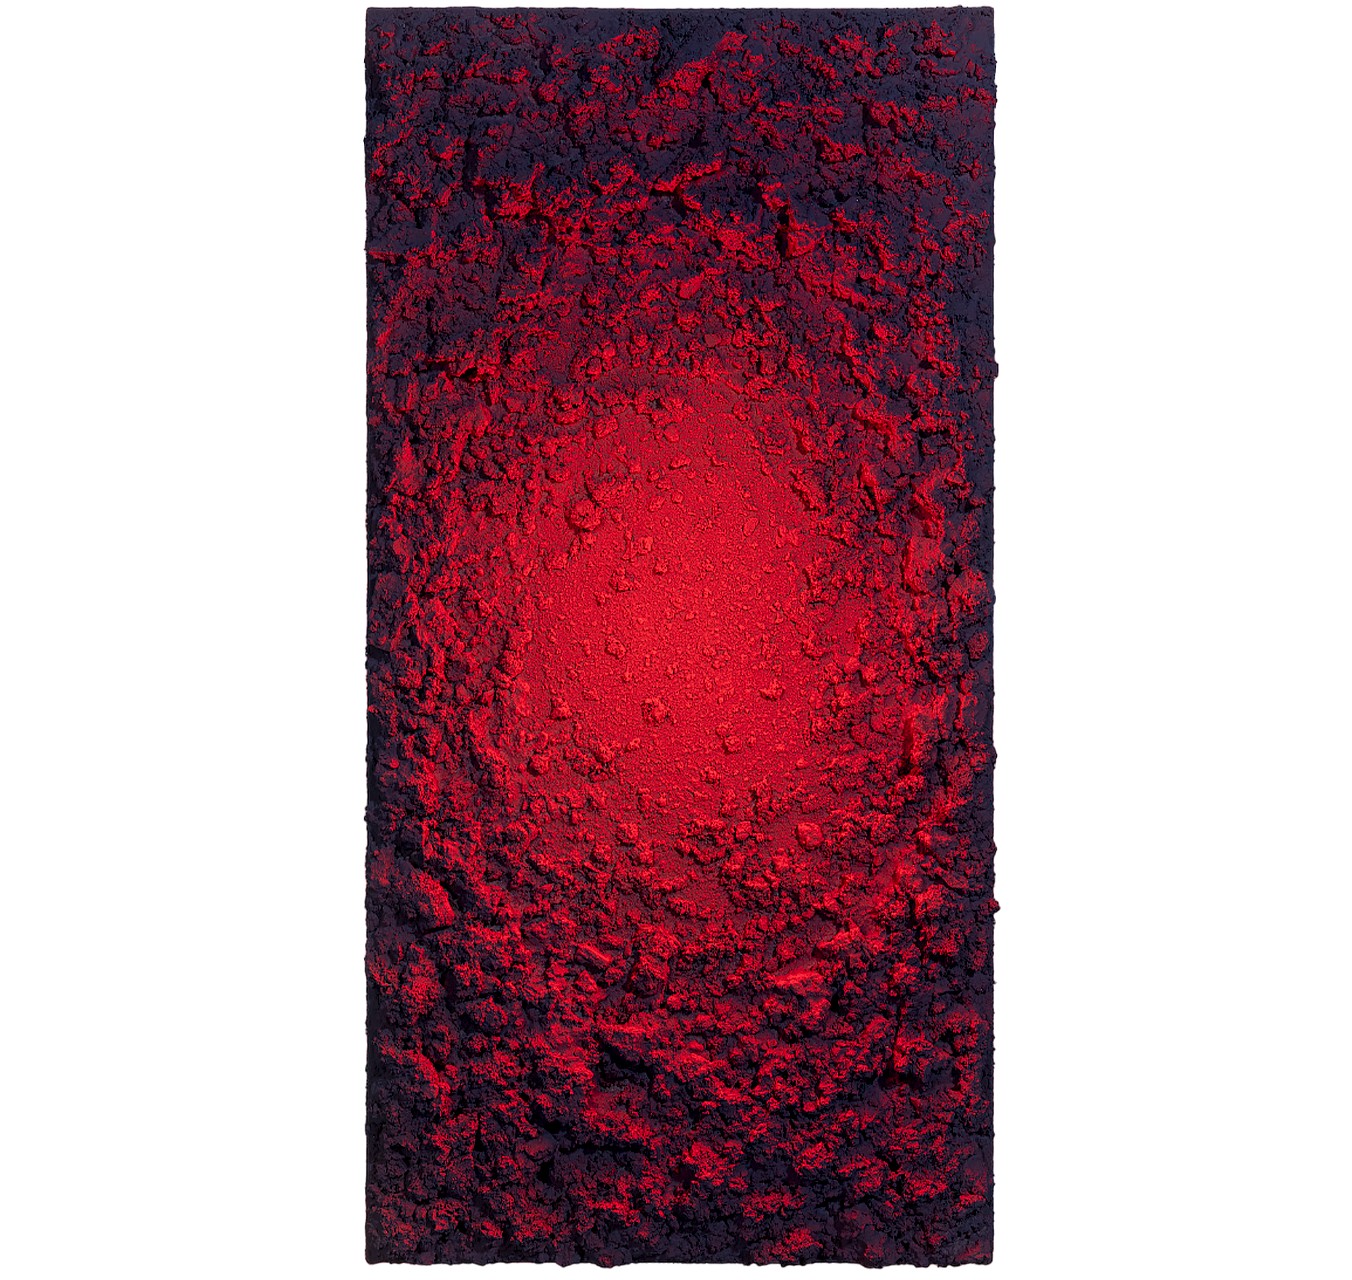 Interstellar Red 18.28 - SAMUEL DEJONG - Galeries Bartoux